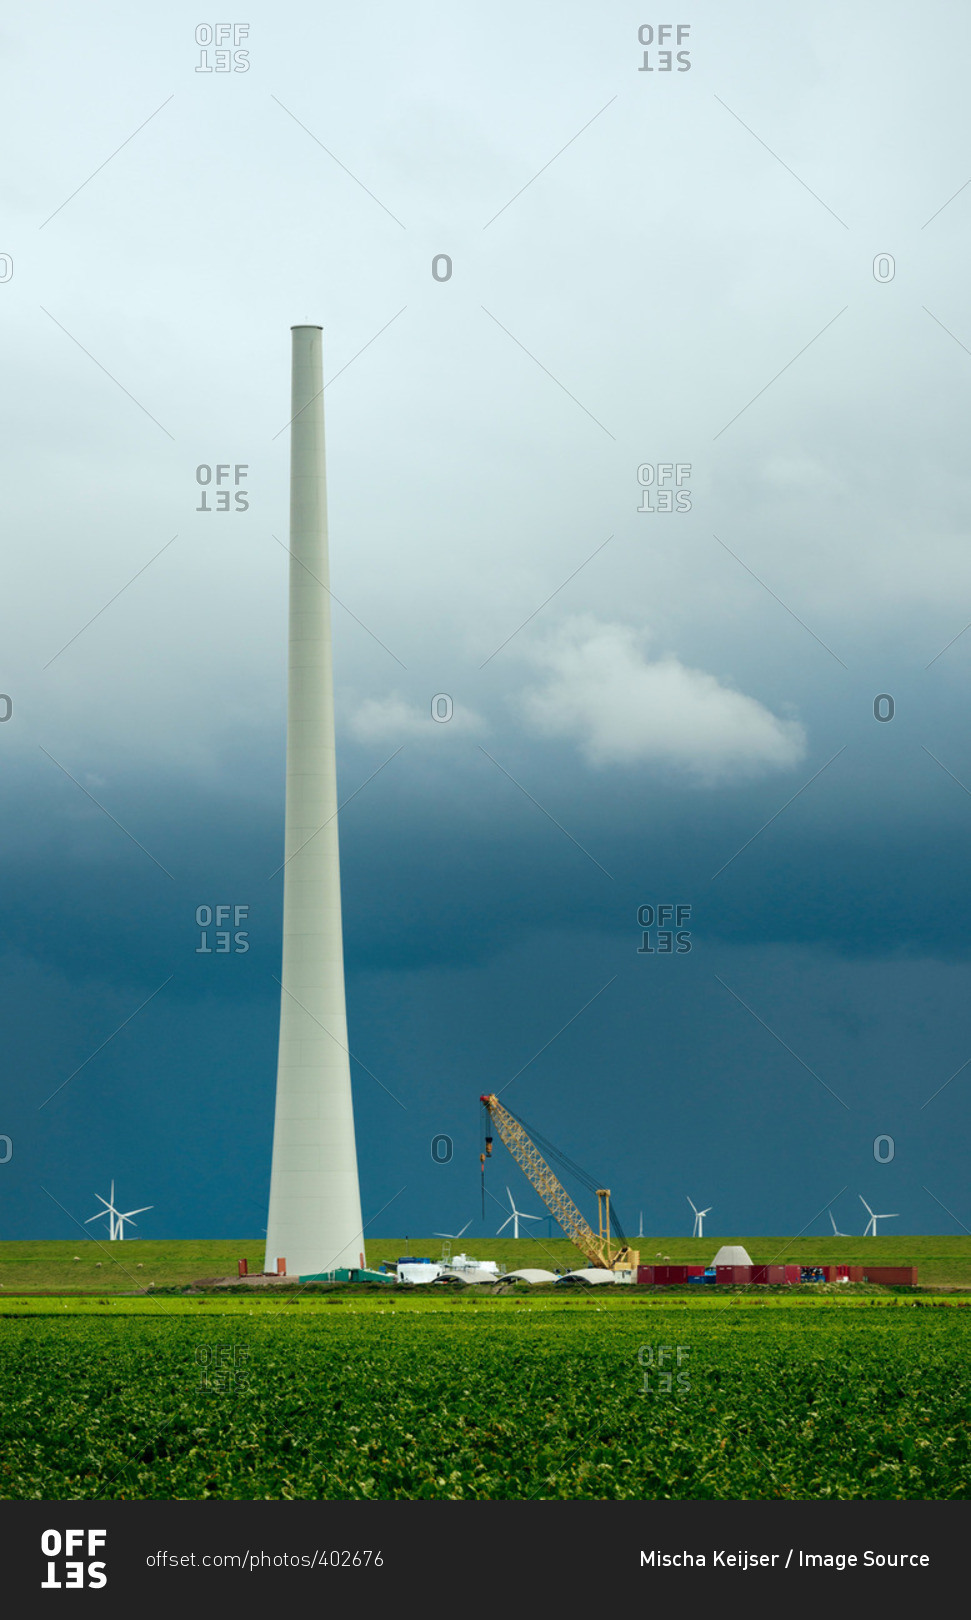 Thunderstorm approaching a wind turbine under construction, Netherlands